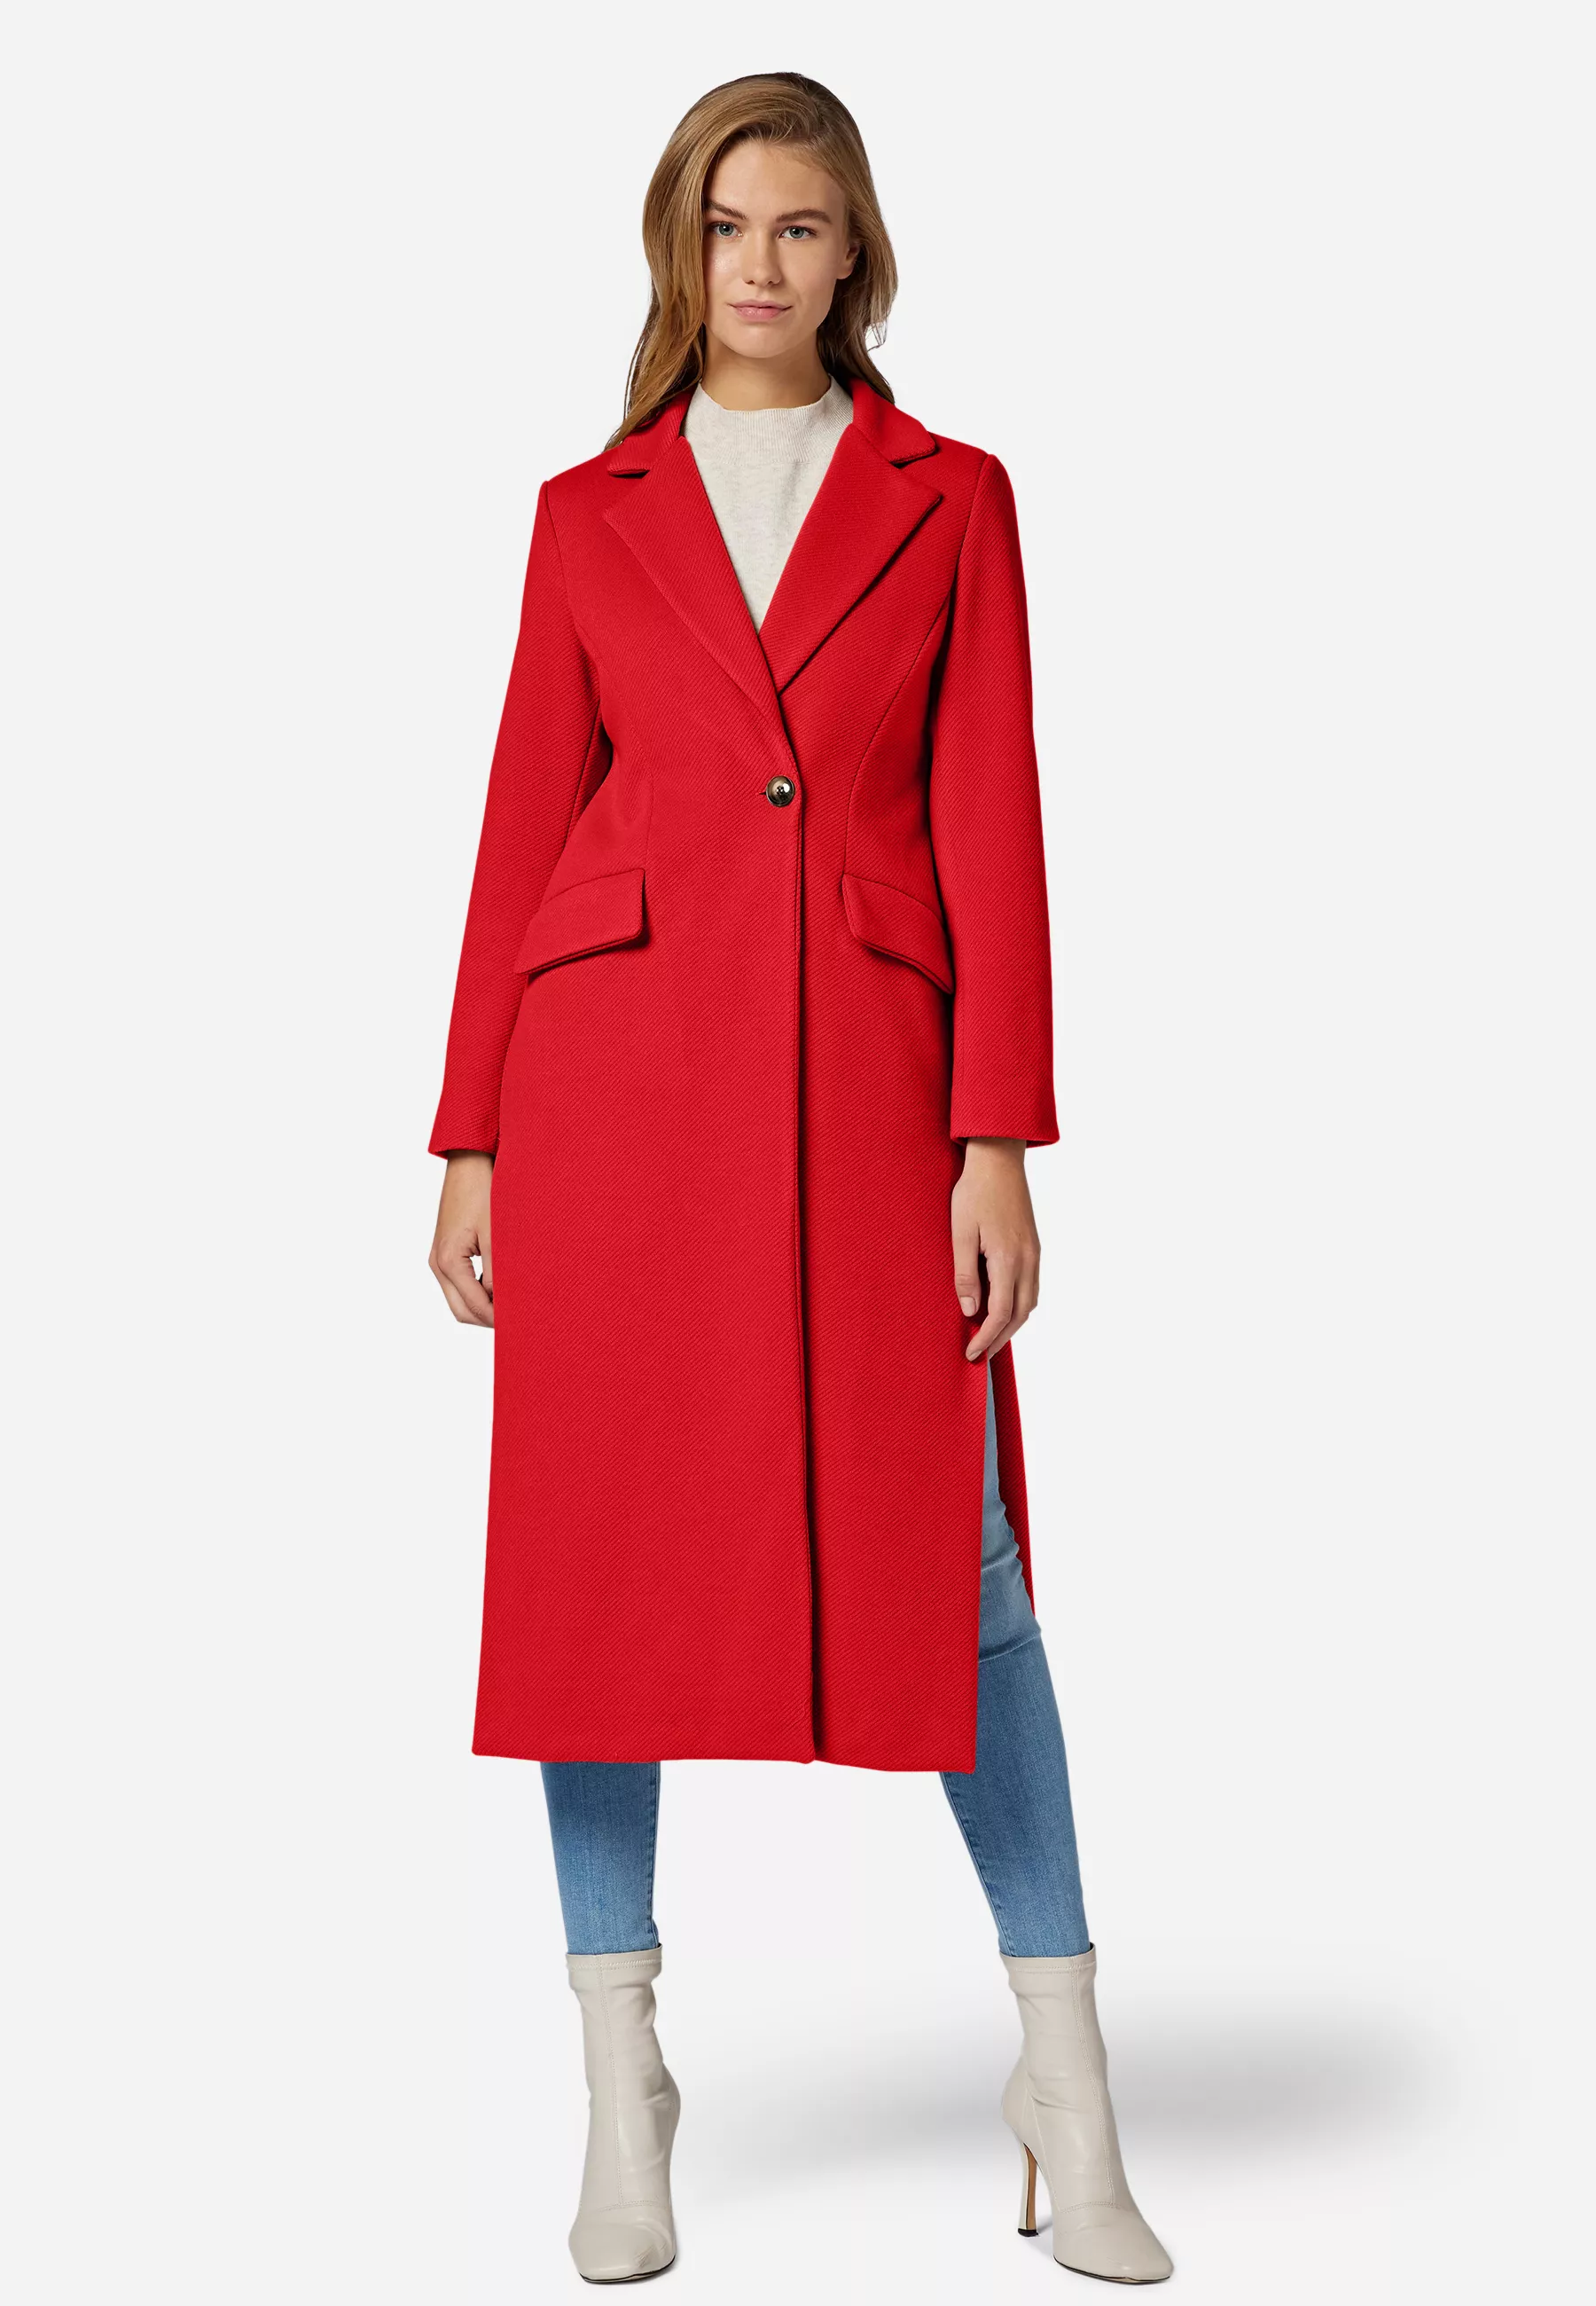 Damen Mantel Grazia in Rot von Ricano, Frontansicht am Model